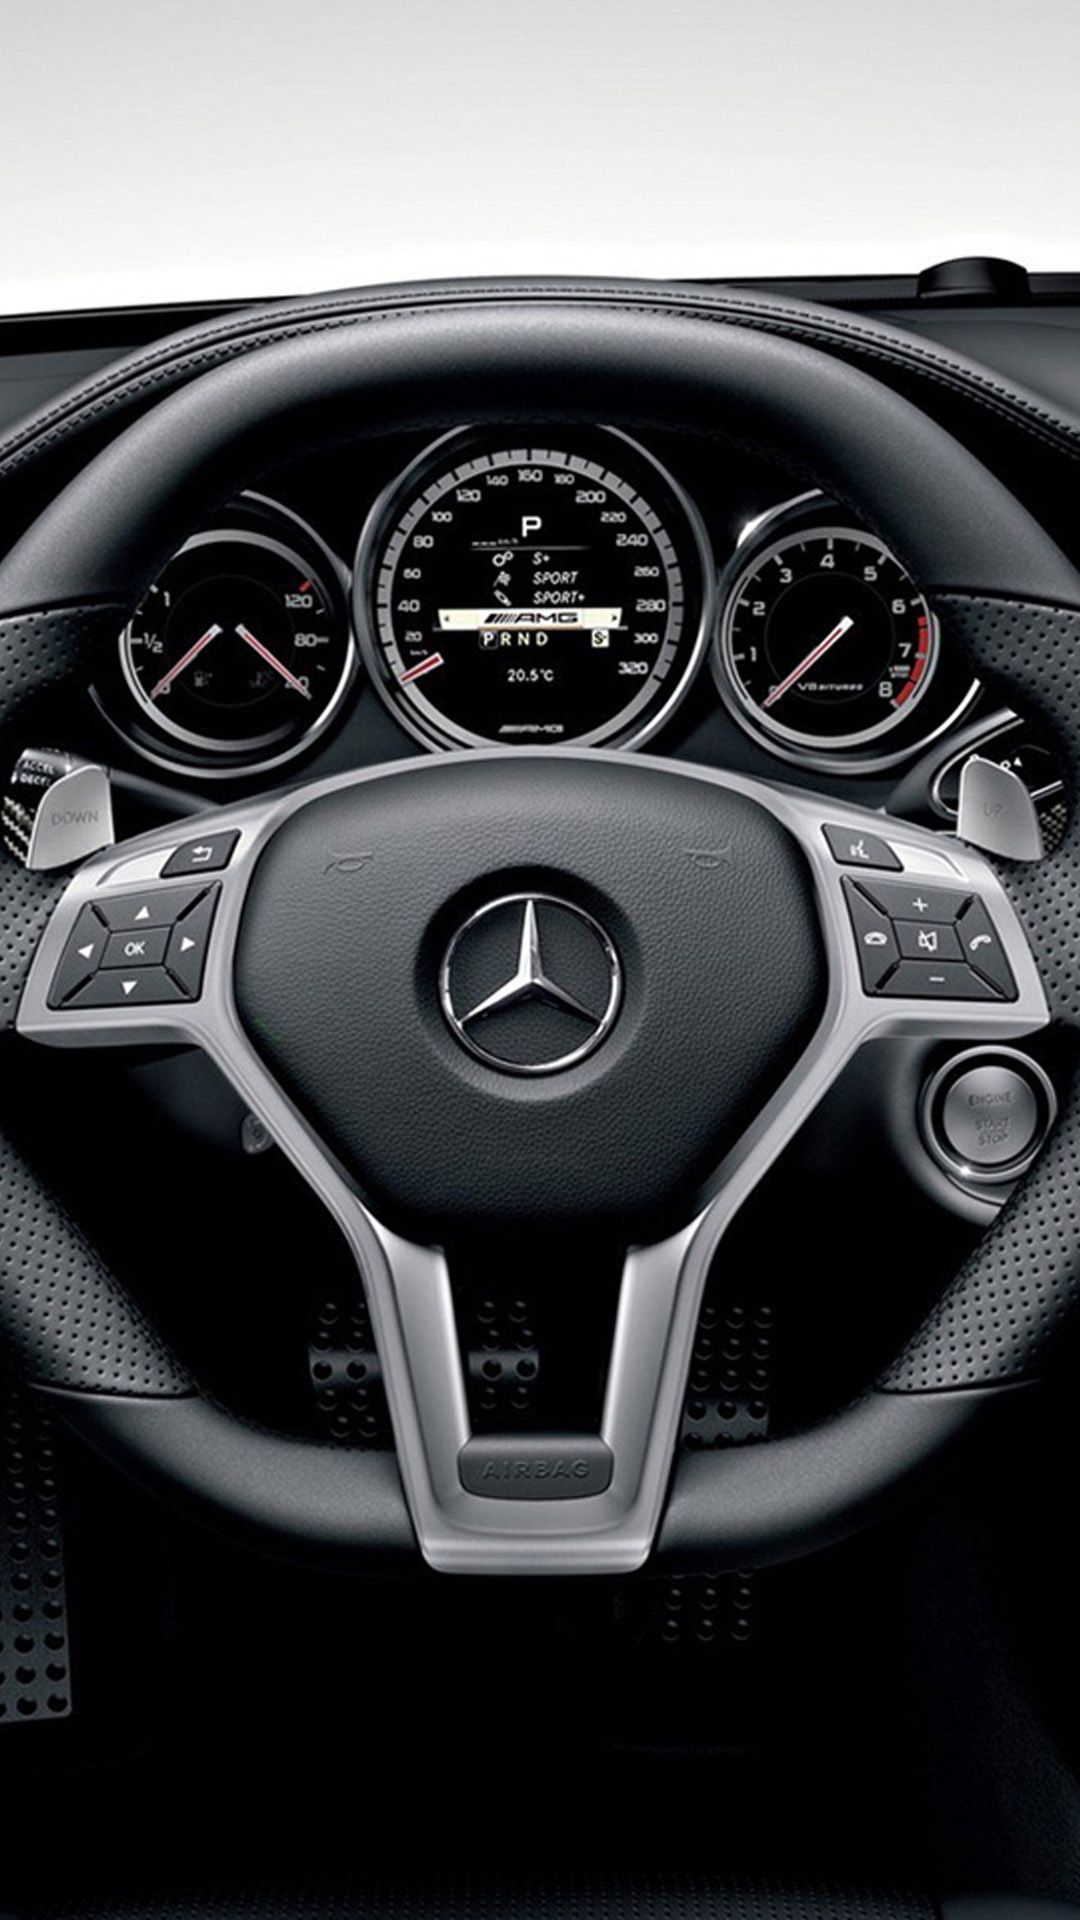 mercedes benz cls63 amg interior Wallpaper for Galaxy S5. Mercedes wallpaper, Mercedes, Mercedes interior